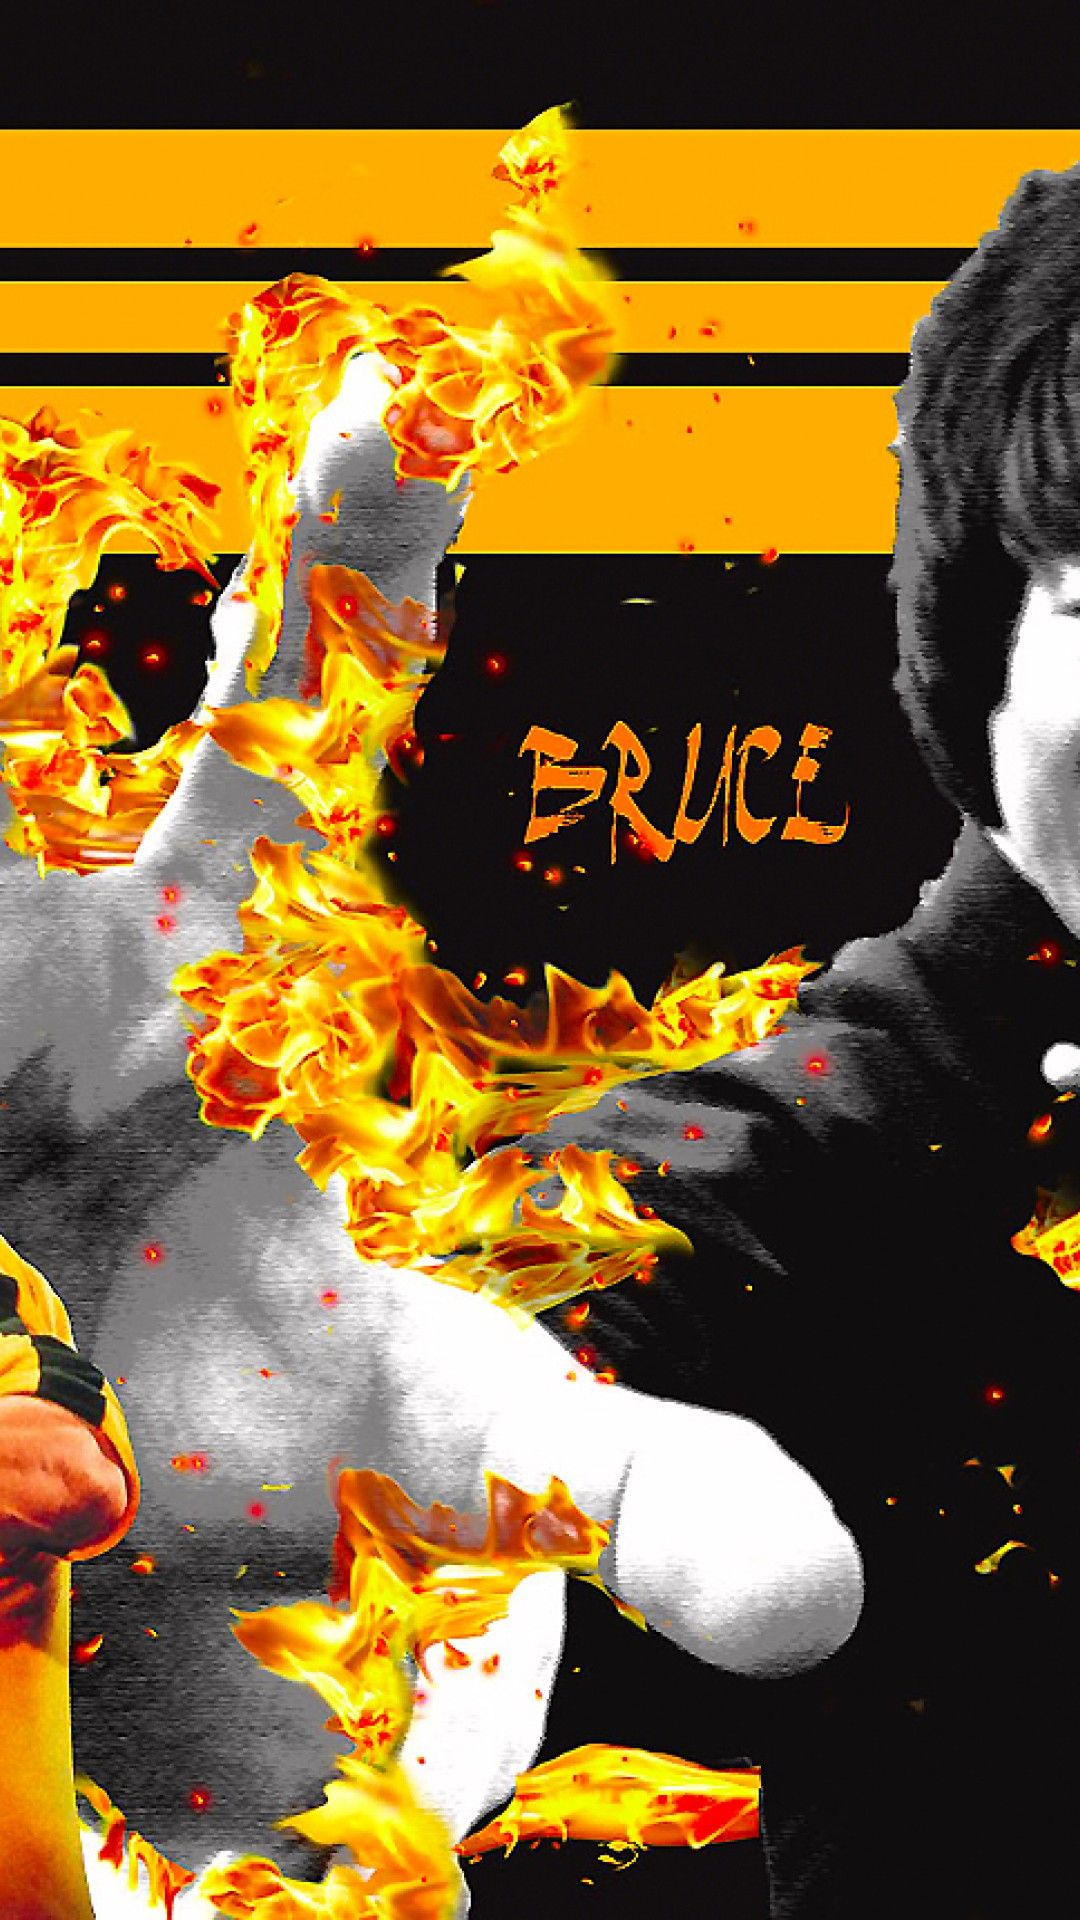 Bruce Lee HD Wallpaper iPhone 6 / 6S Plus